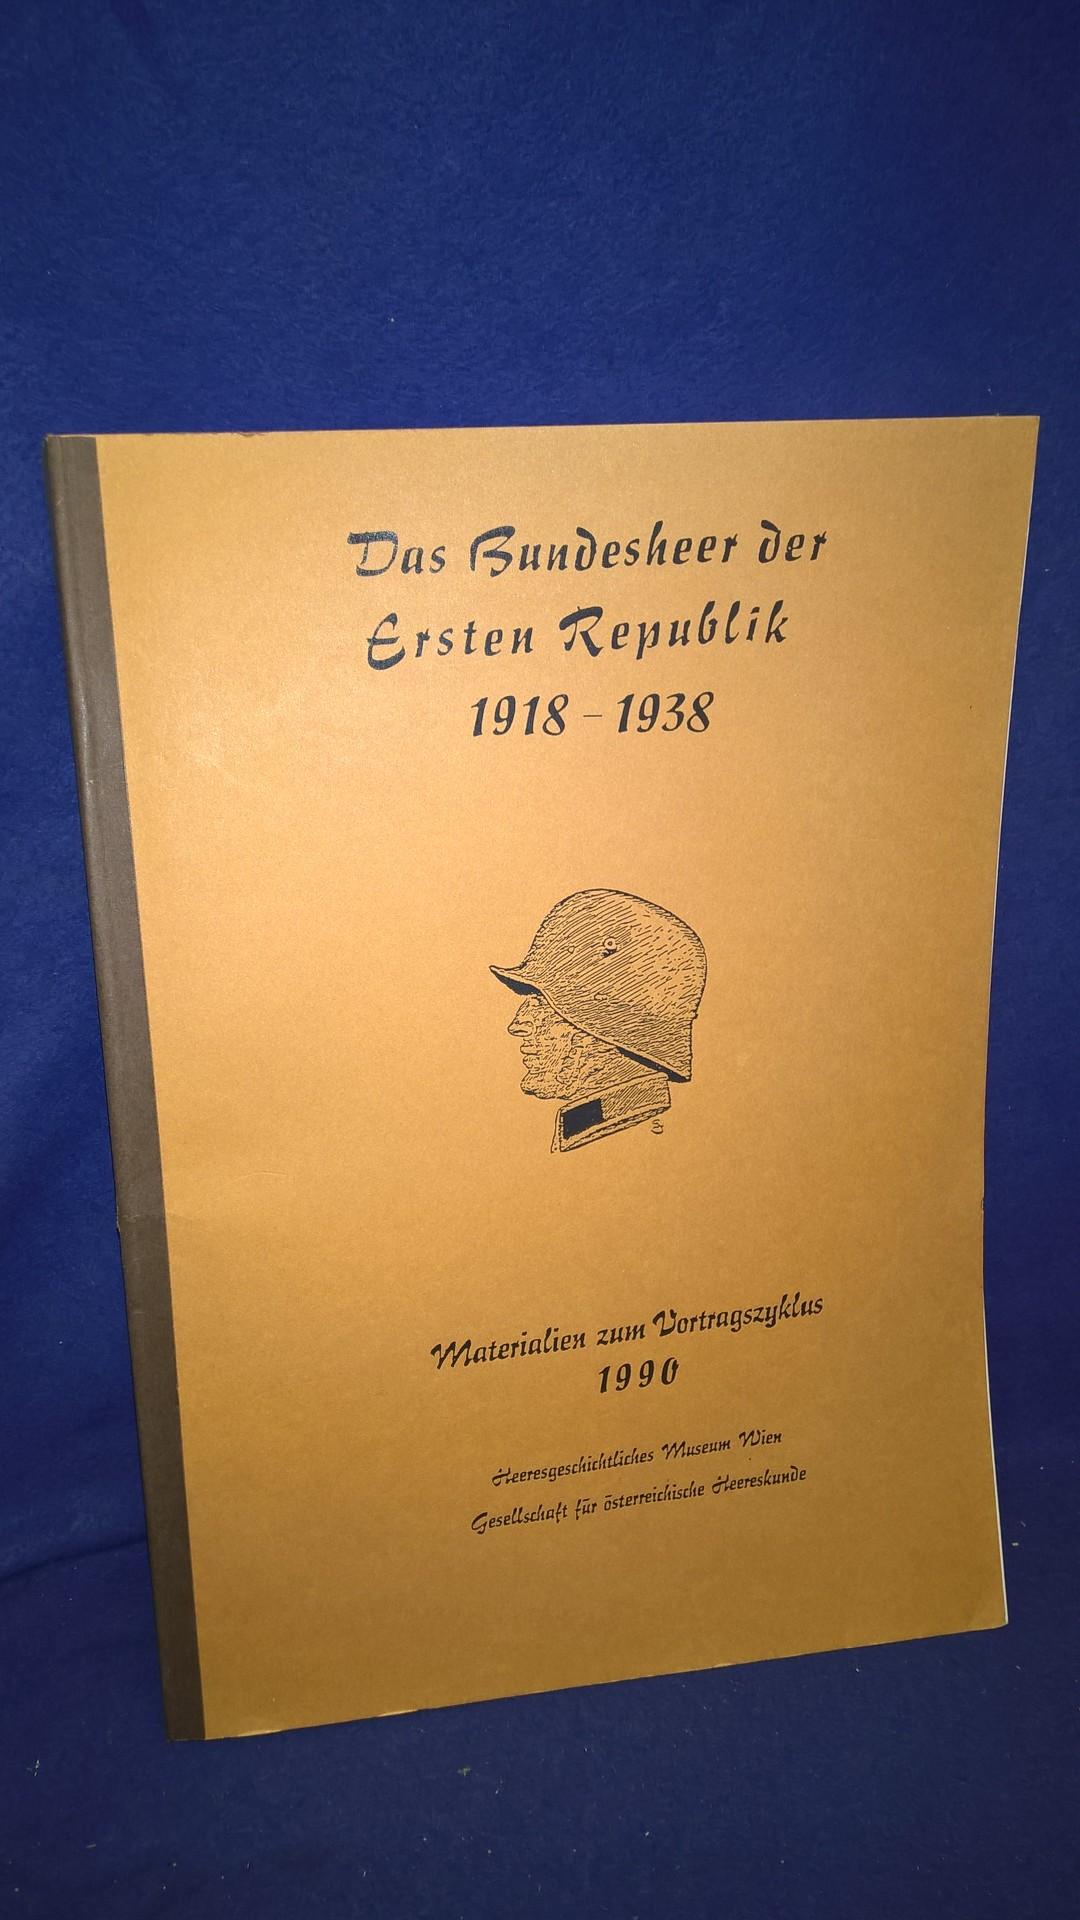 Das Bundesheer der Ersten Republik 1918-1938